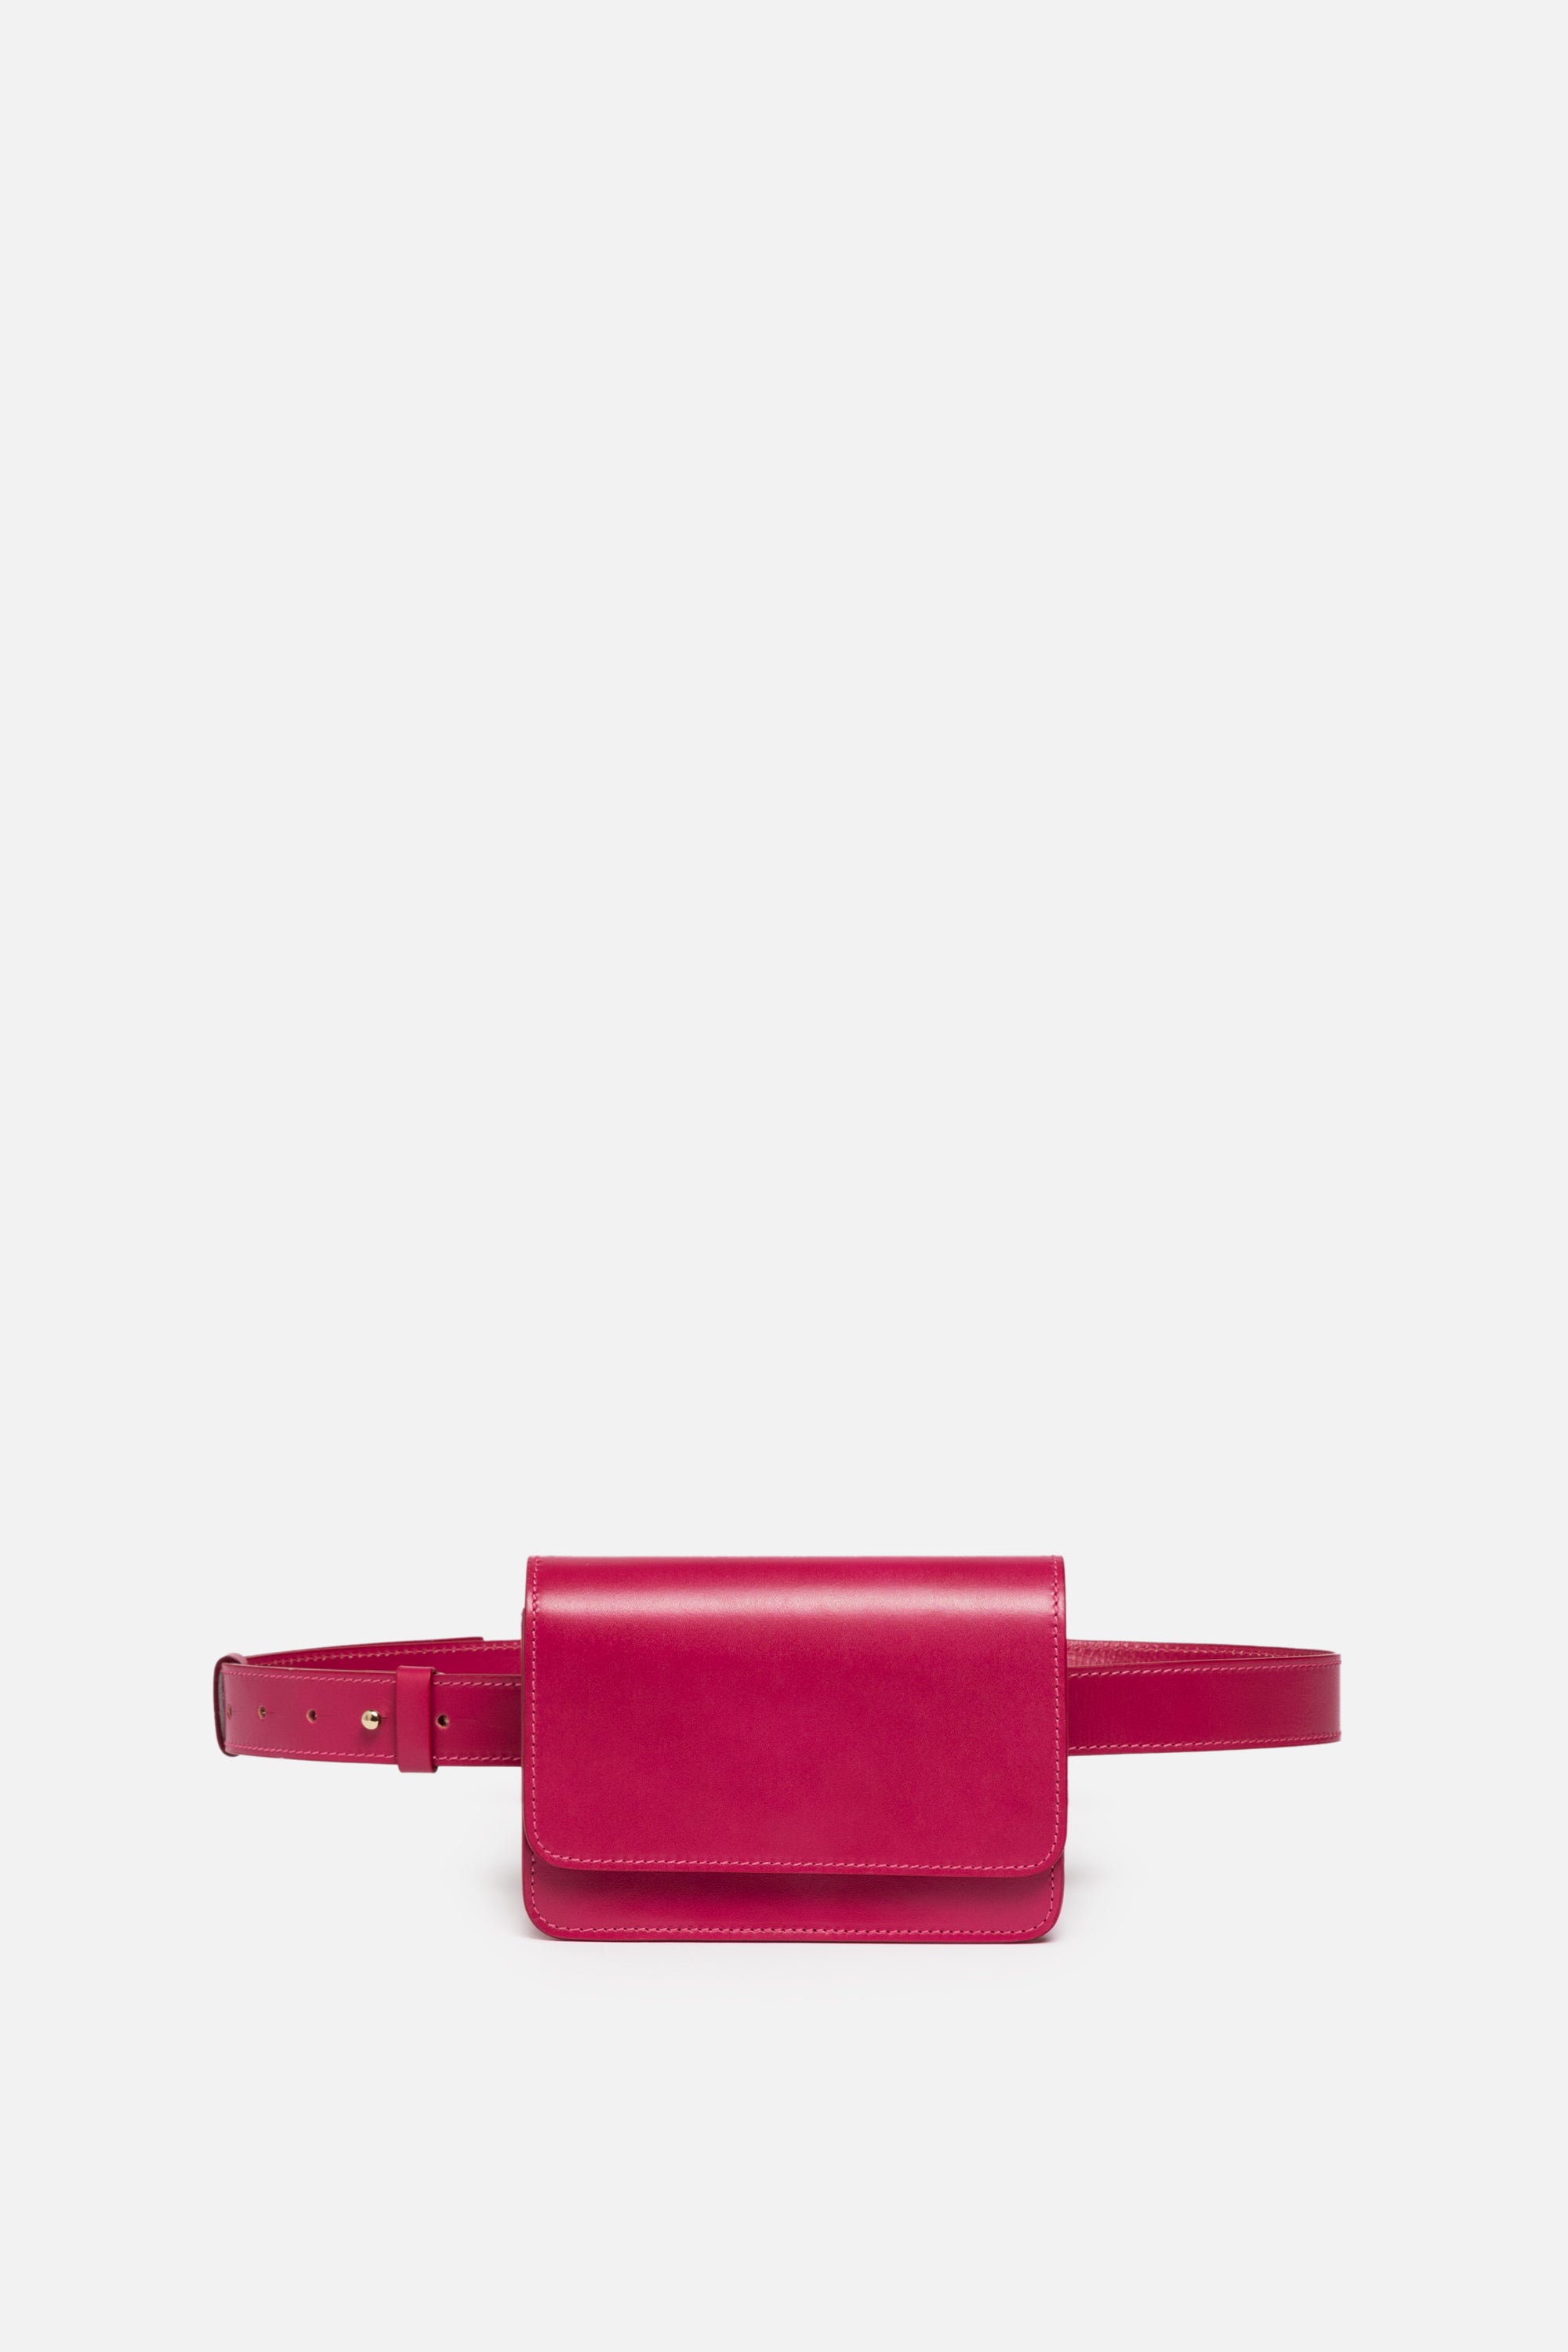 Gucci Logo Pink Calf Leather, Belt Bag - Aftersix Lifestyle Inc.